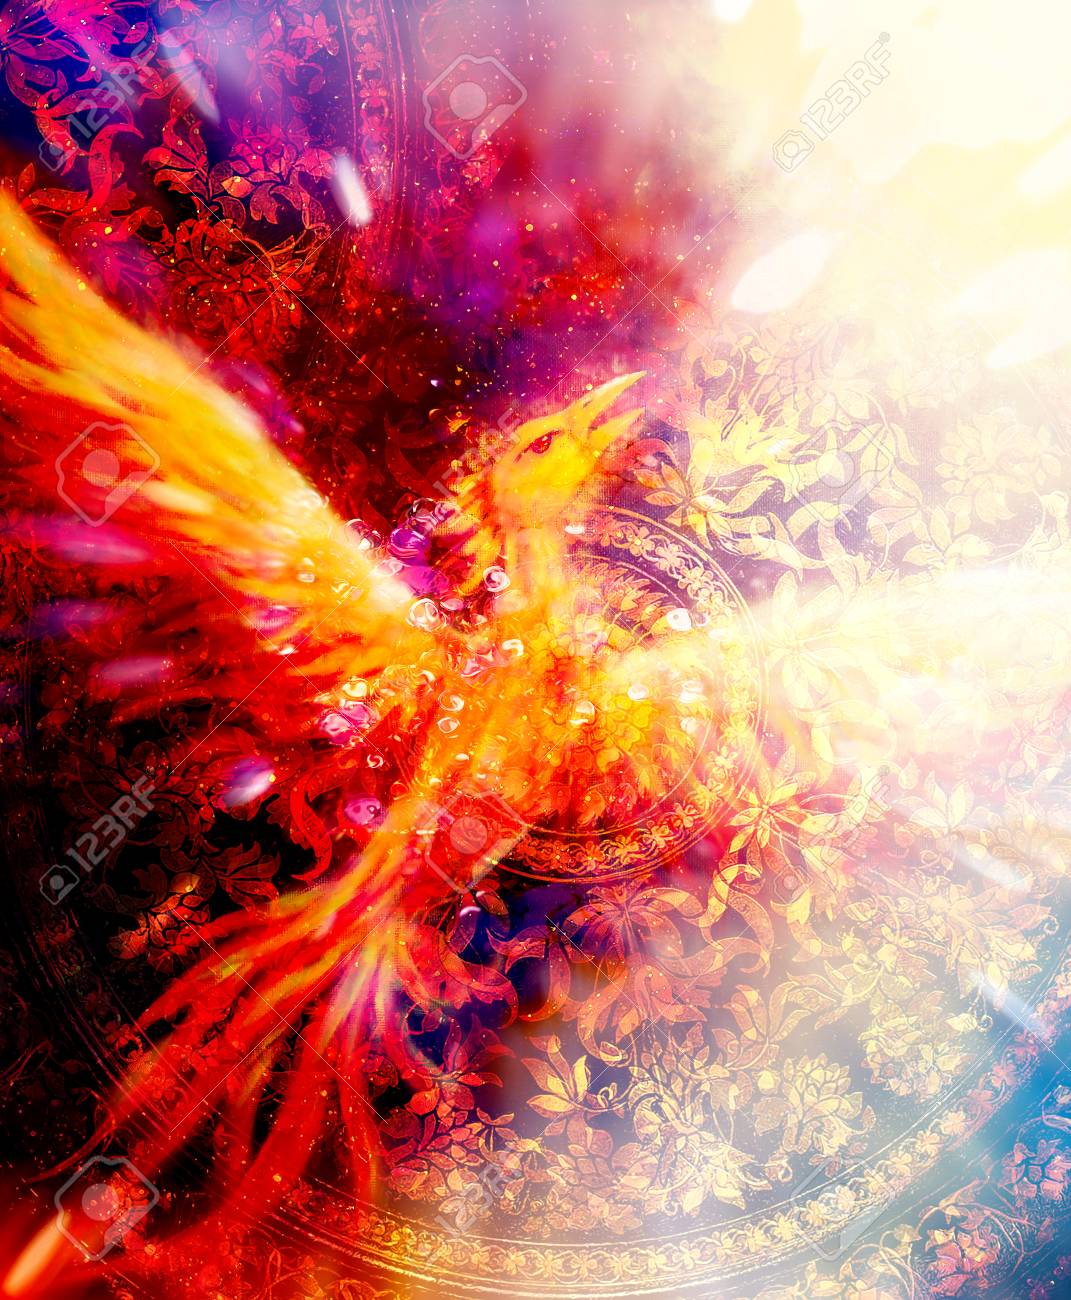 Flying Phoenix Bird As Symbol Of Rebirth And New Beginning